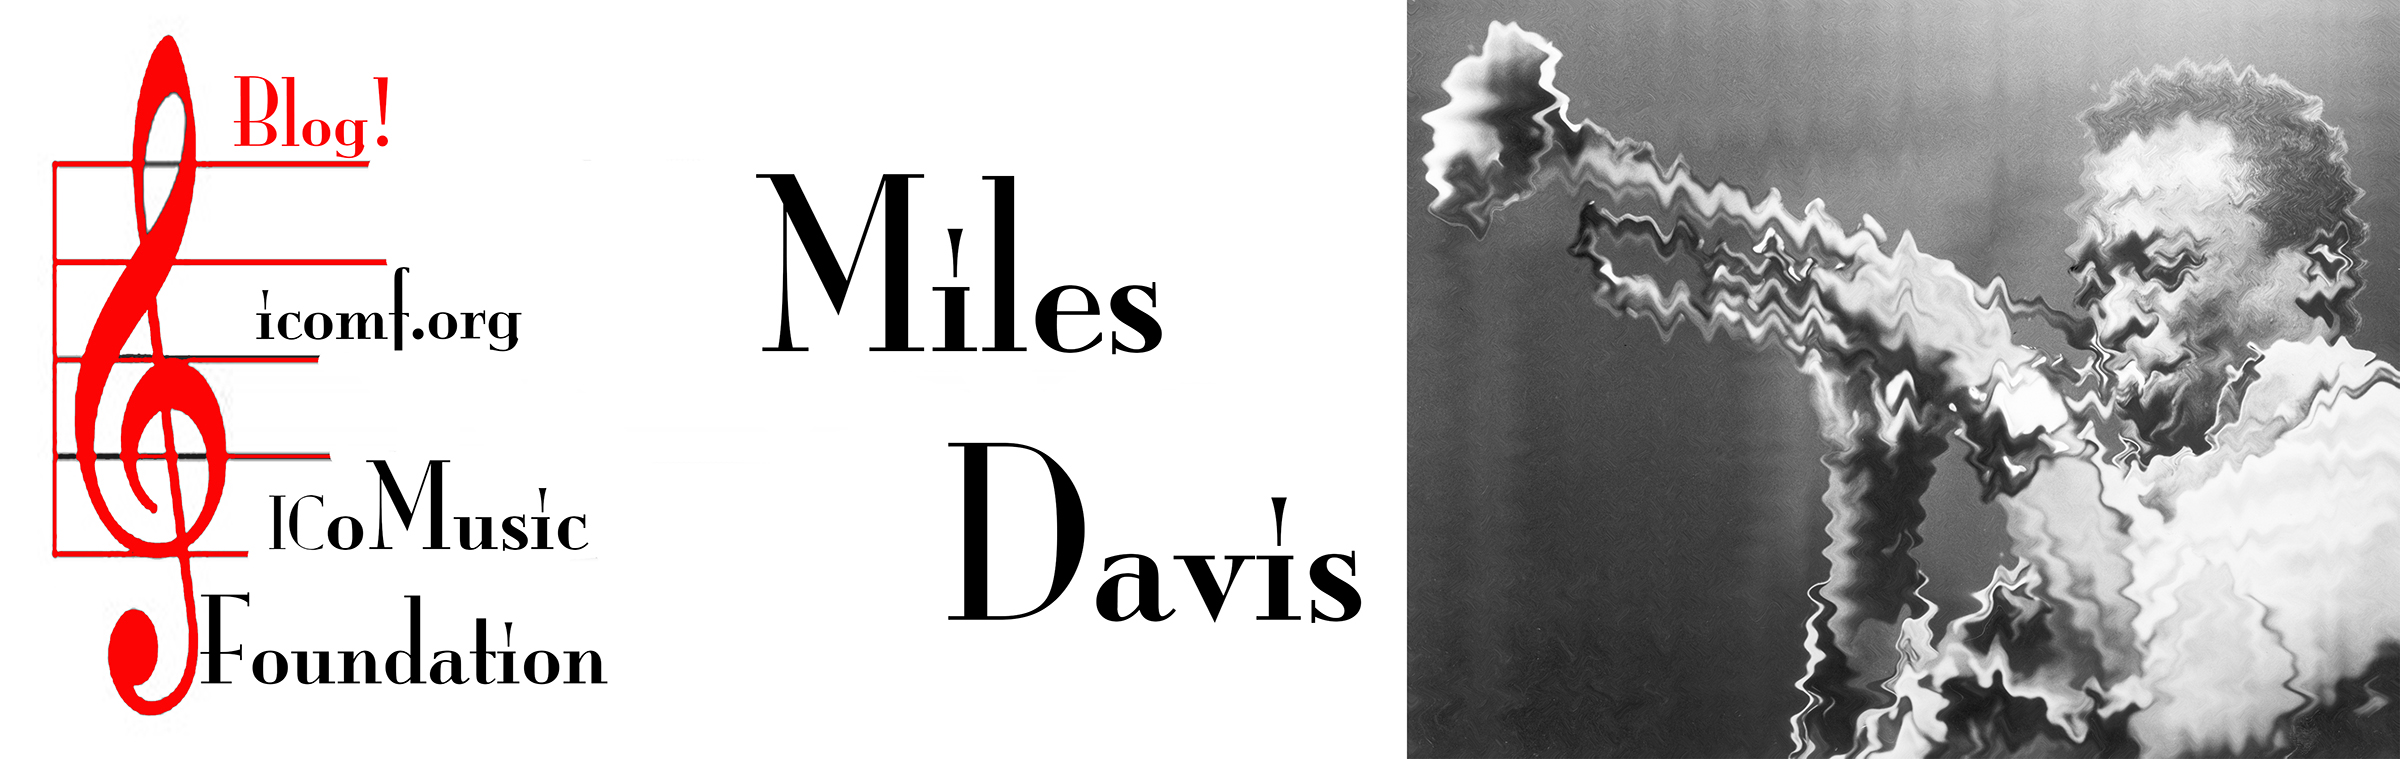 Miles Davis Blog Banner